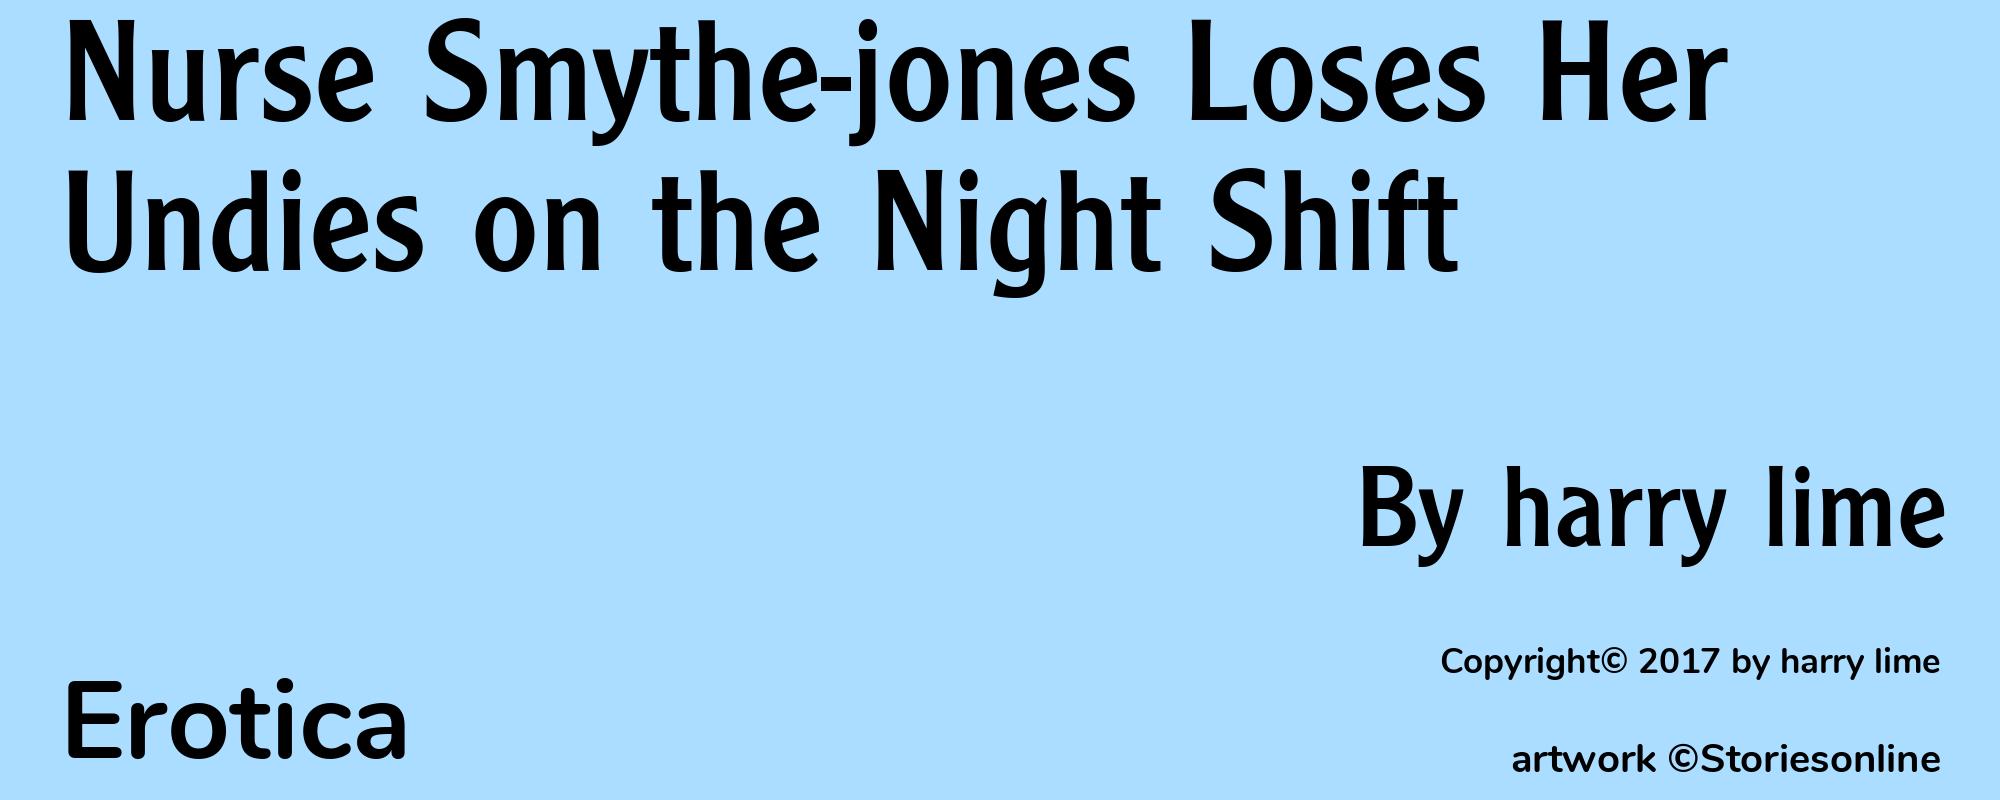 Nurse Smythe-jones Loses Her Undies on the Night Shift - Cover